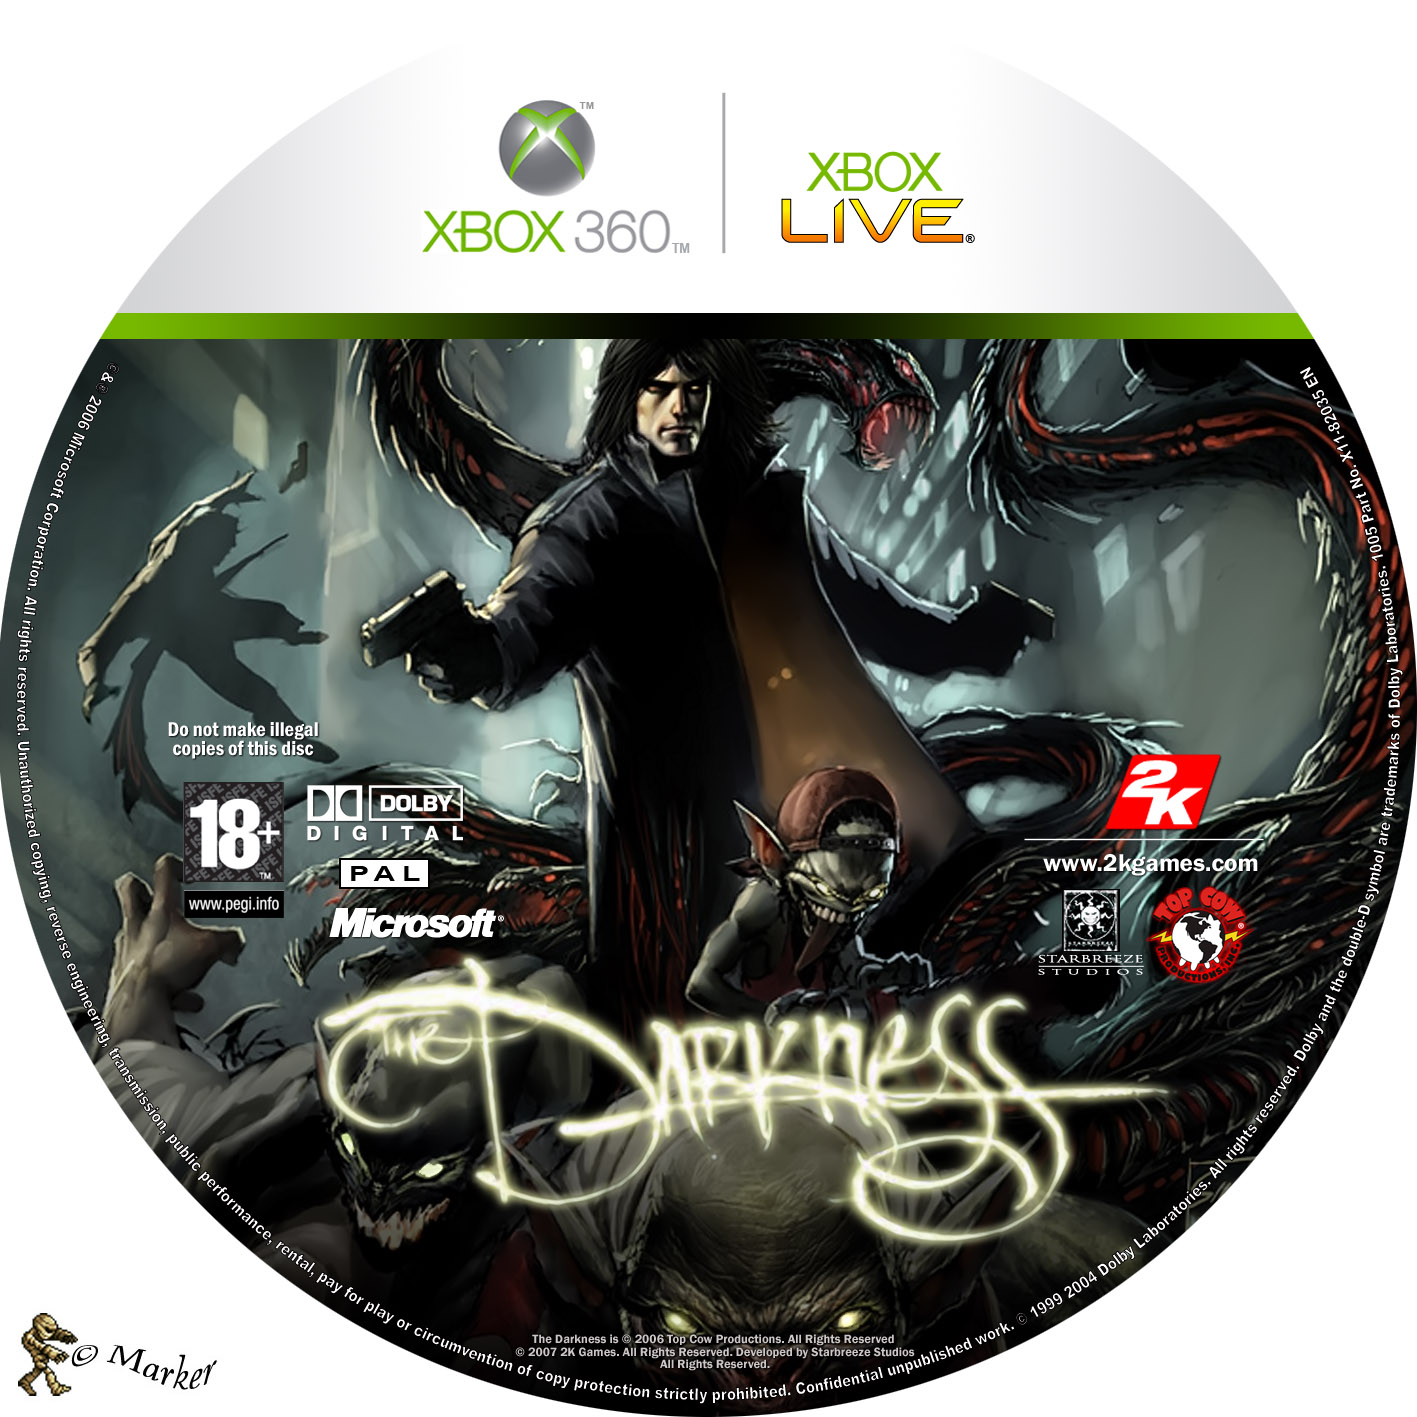 Half life xbox. Диск Darkness 2 Xbox 360. Darkness Xbox 360 диск. The Darkness 2 Xbox 360 обложка диска. Darkness 2 обложка Xbox 360.